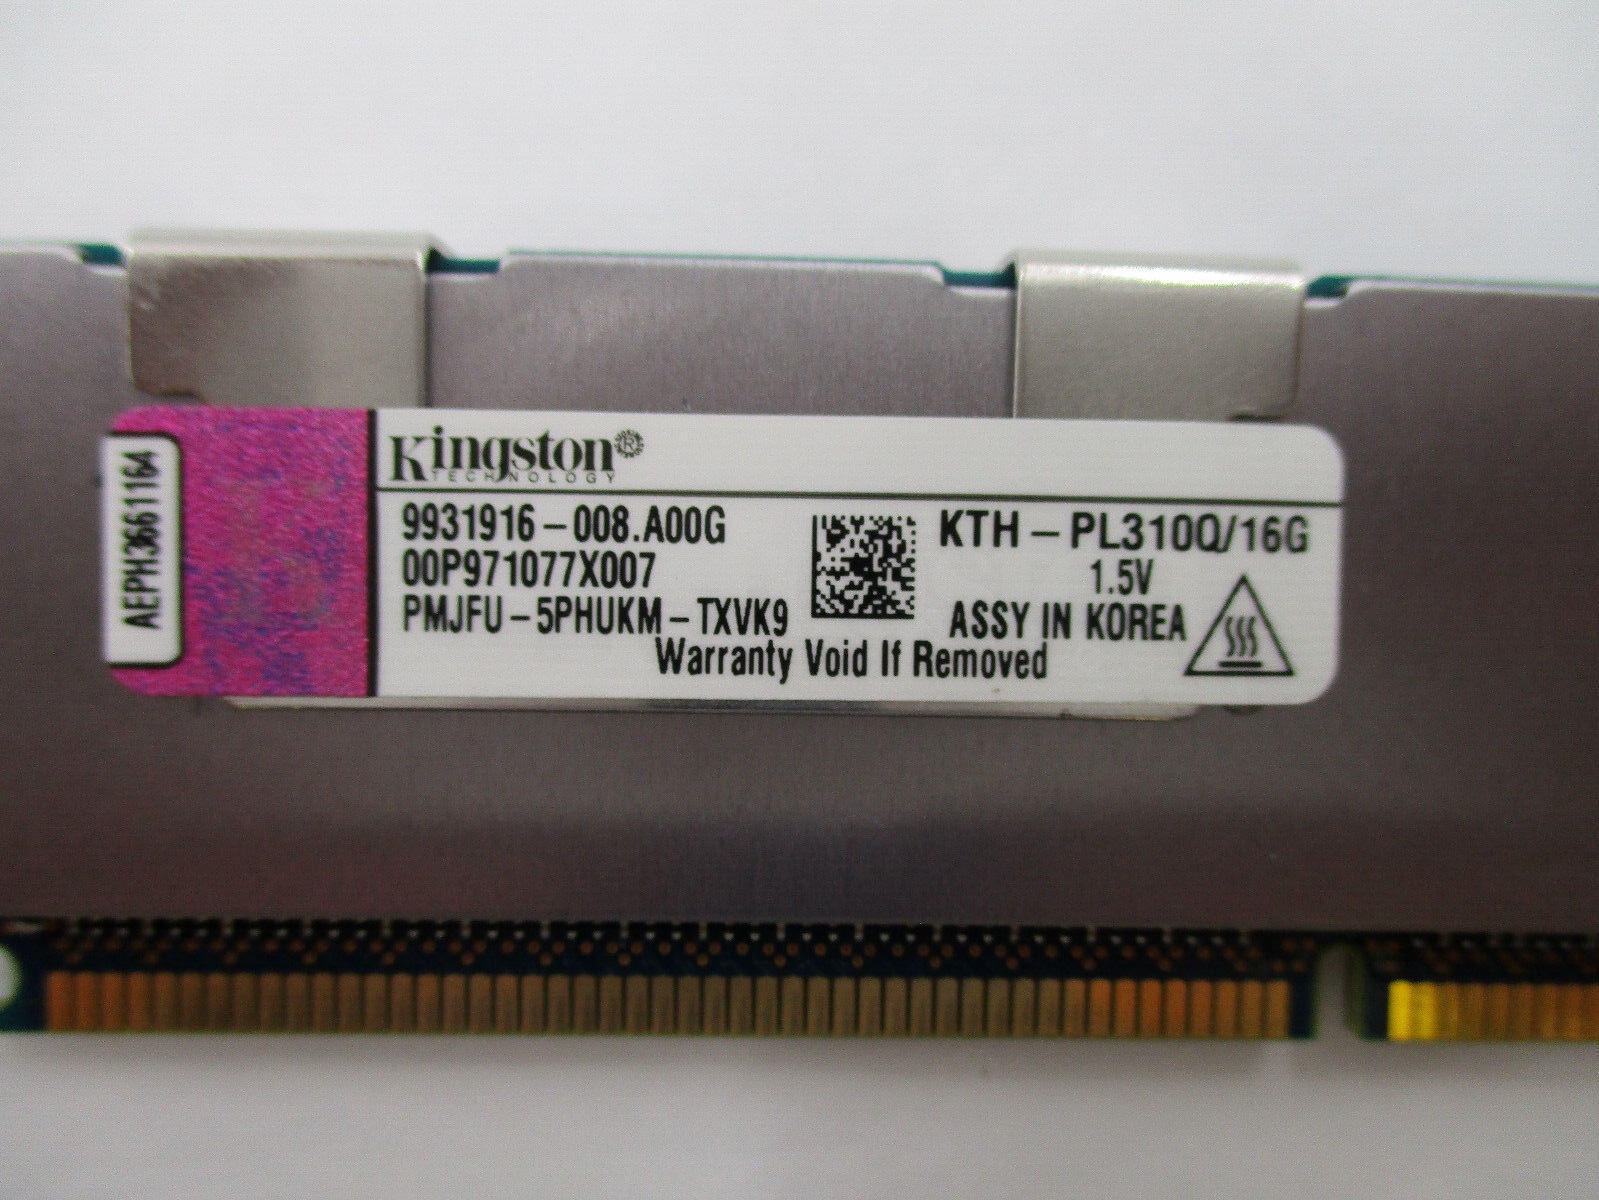 192GB Lot of 12 Kingston kth-pl310q/16g 16GB PC3-8500 DDR3-1066 Server Mem. RAM